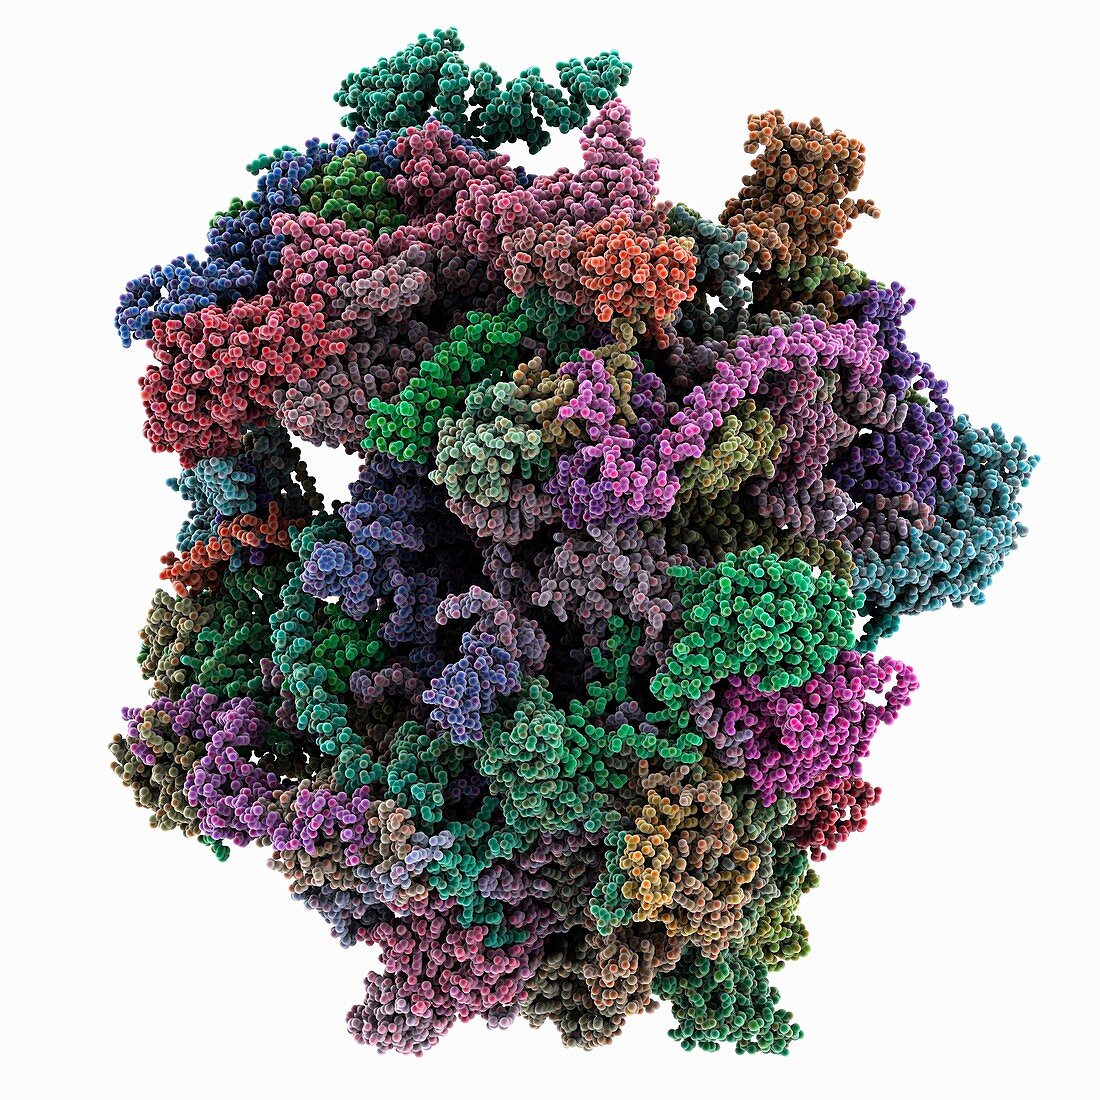 Human mitochondrial ribosome complex, illustration